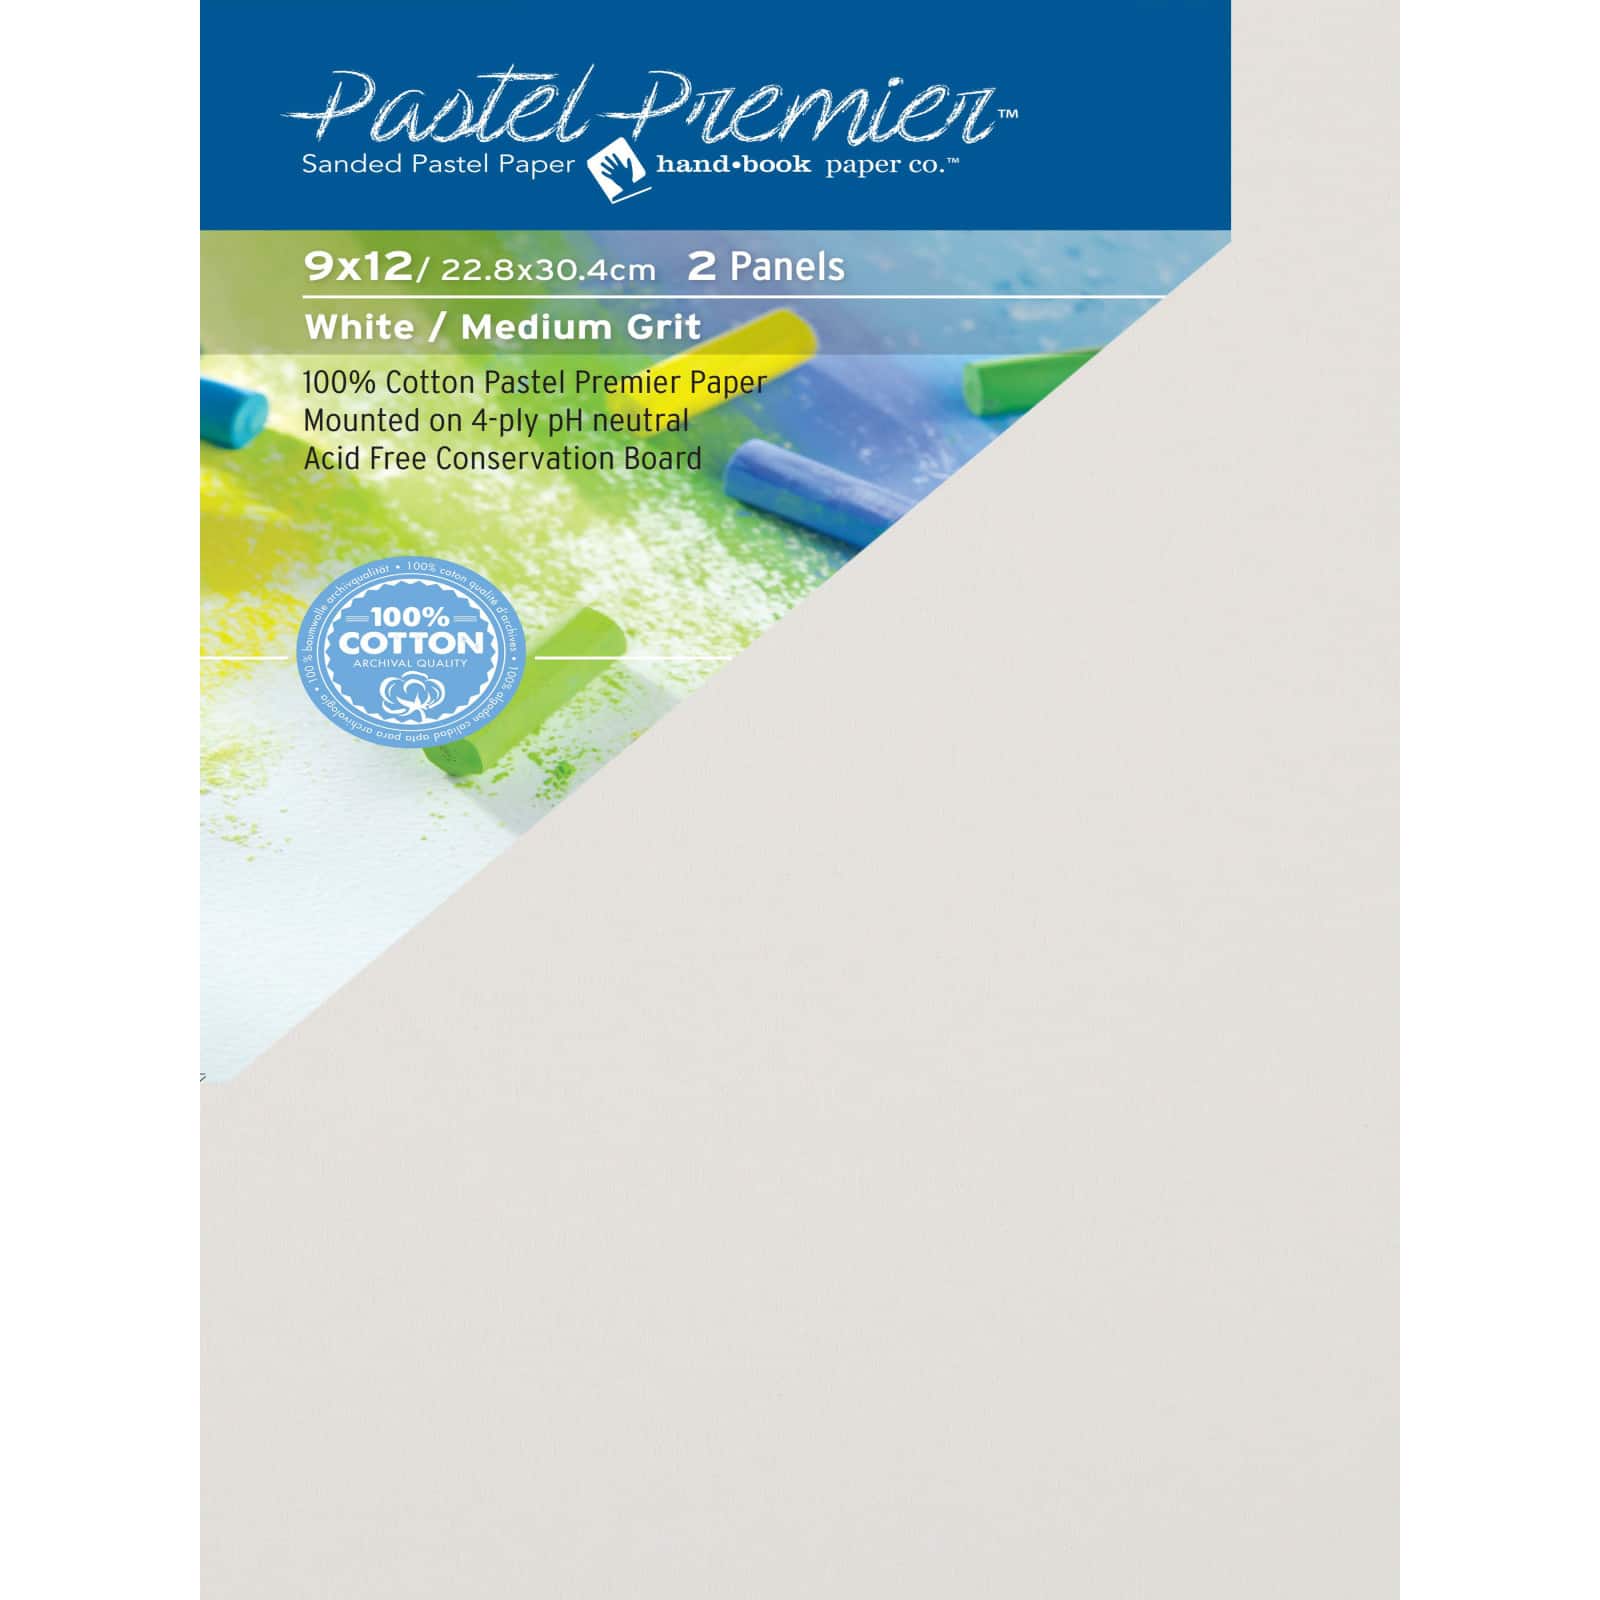 Pastel Premier™ Handbook Paper Co.™ Sanded Pastel Paper, 2ct.